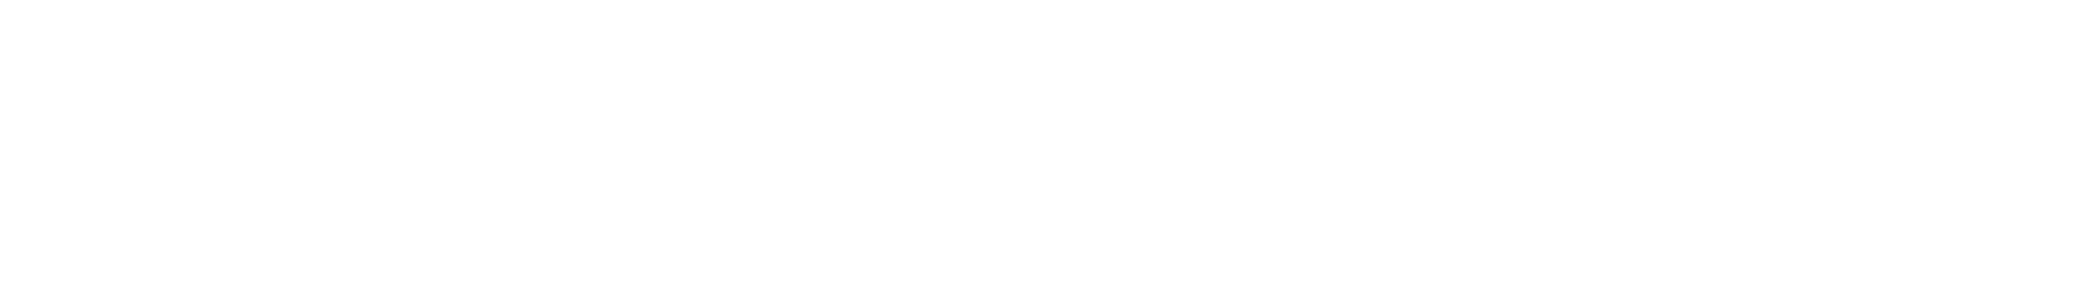 DividendStocks.com